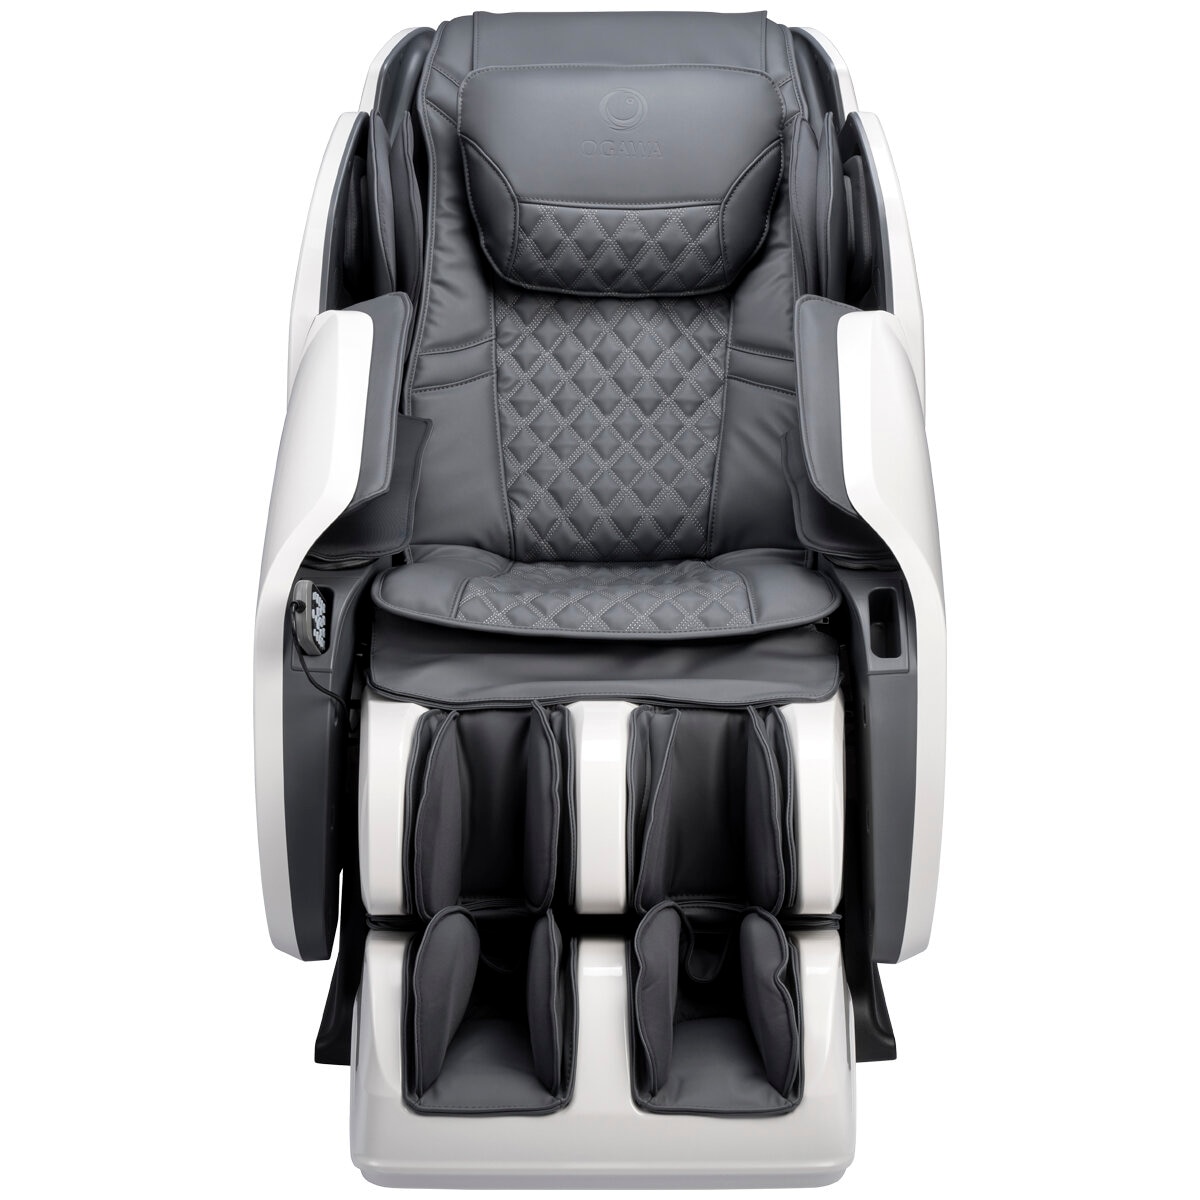 Ogawa Smart Reluxe Massage Chair Costco Australia